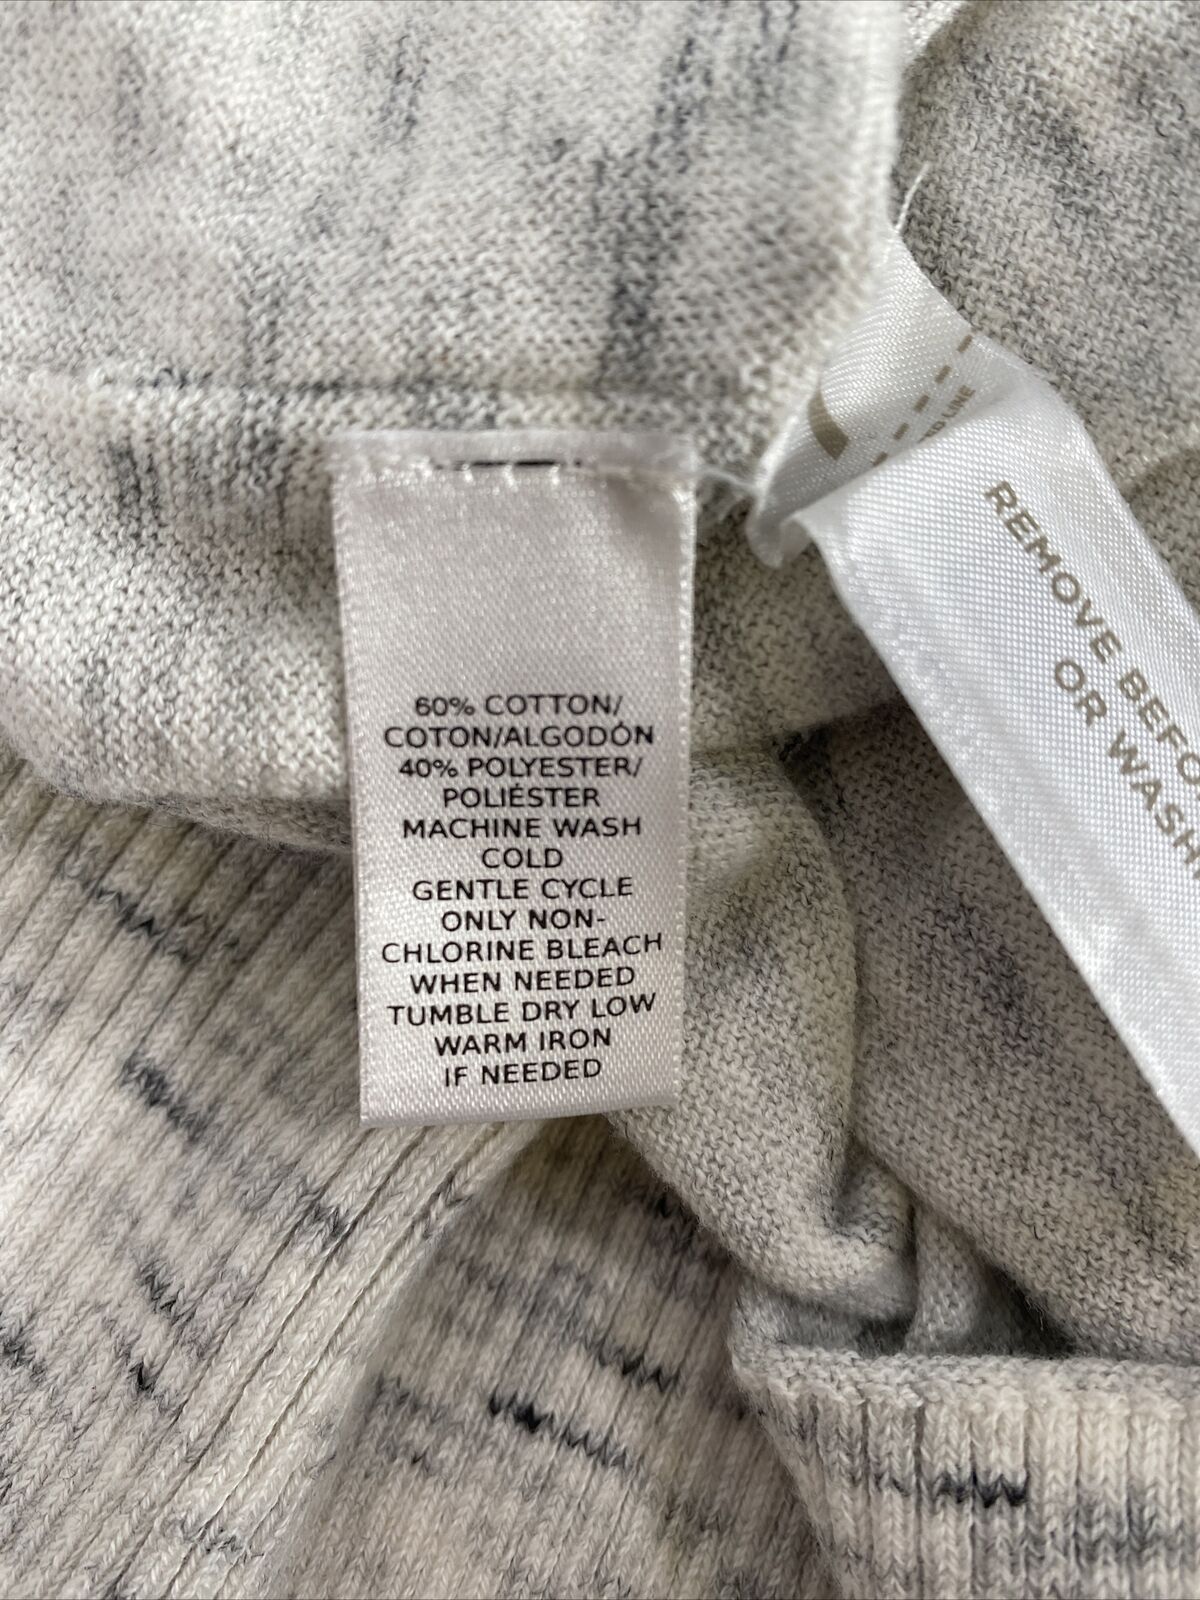 LOFT Women's White/Gray Long Sleeve Button Up Cardigan Sweater - M